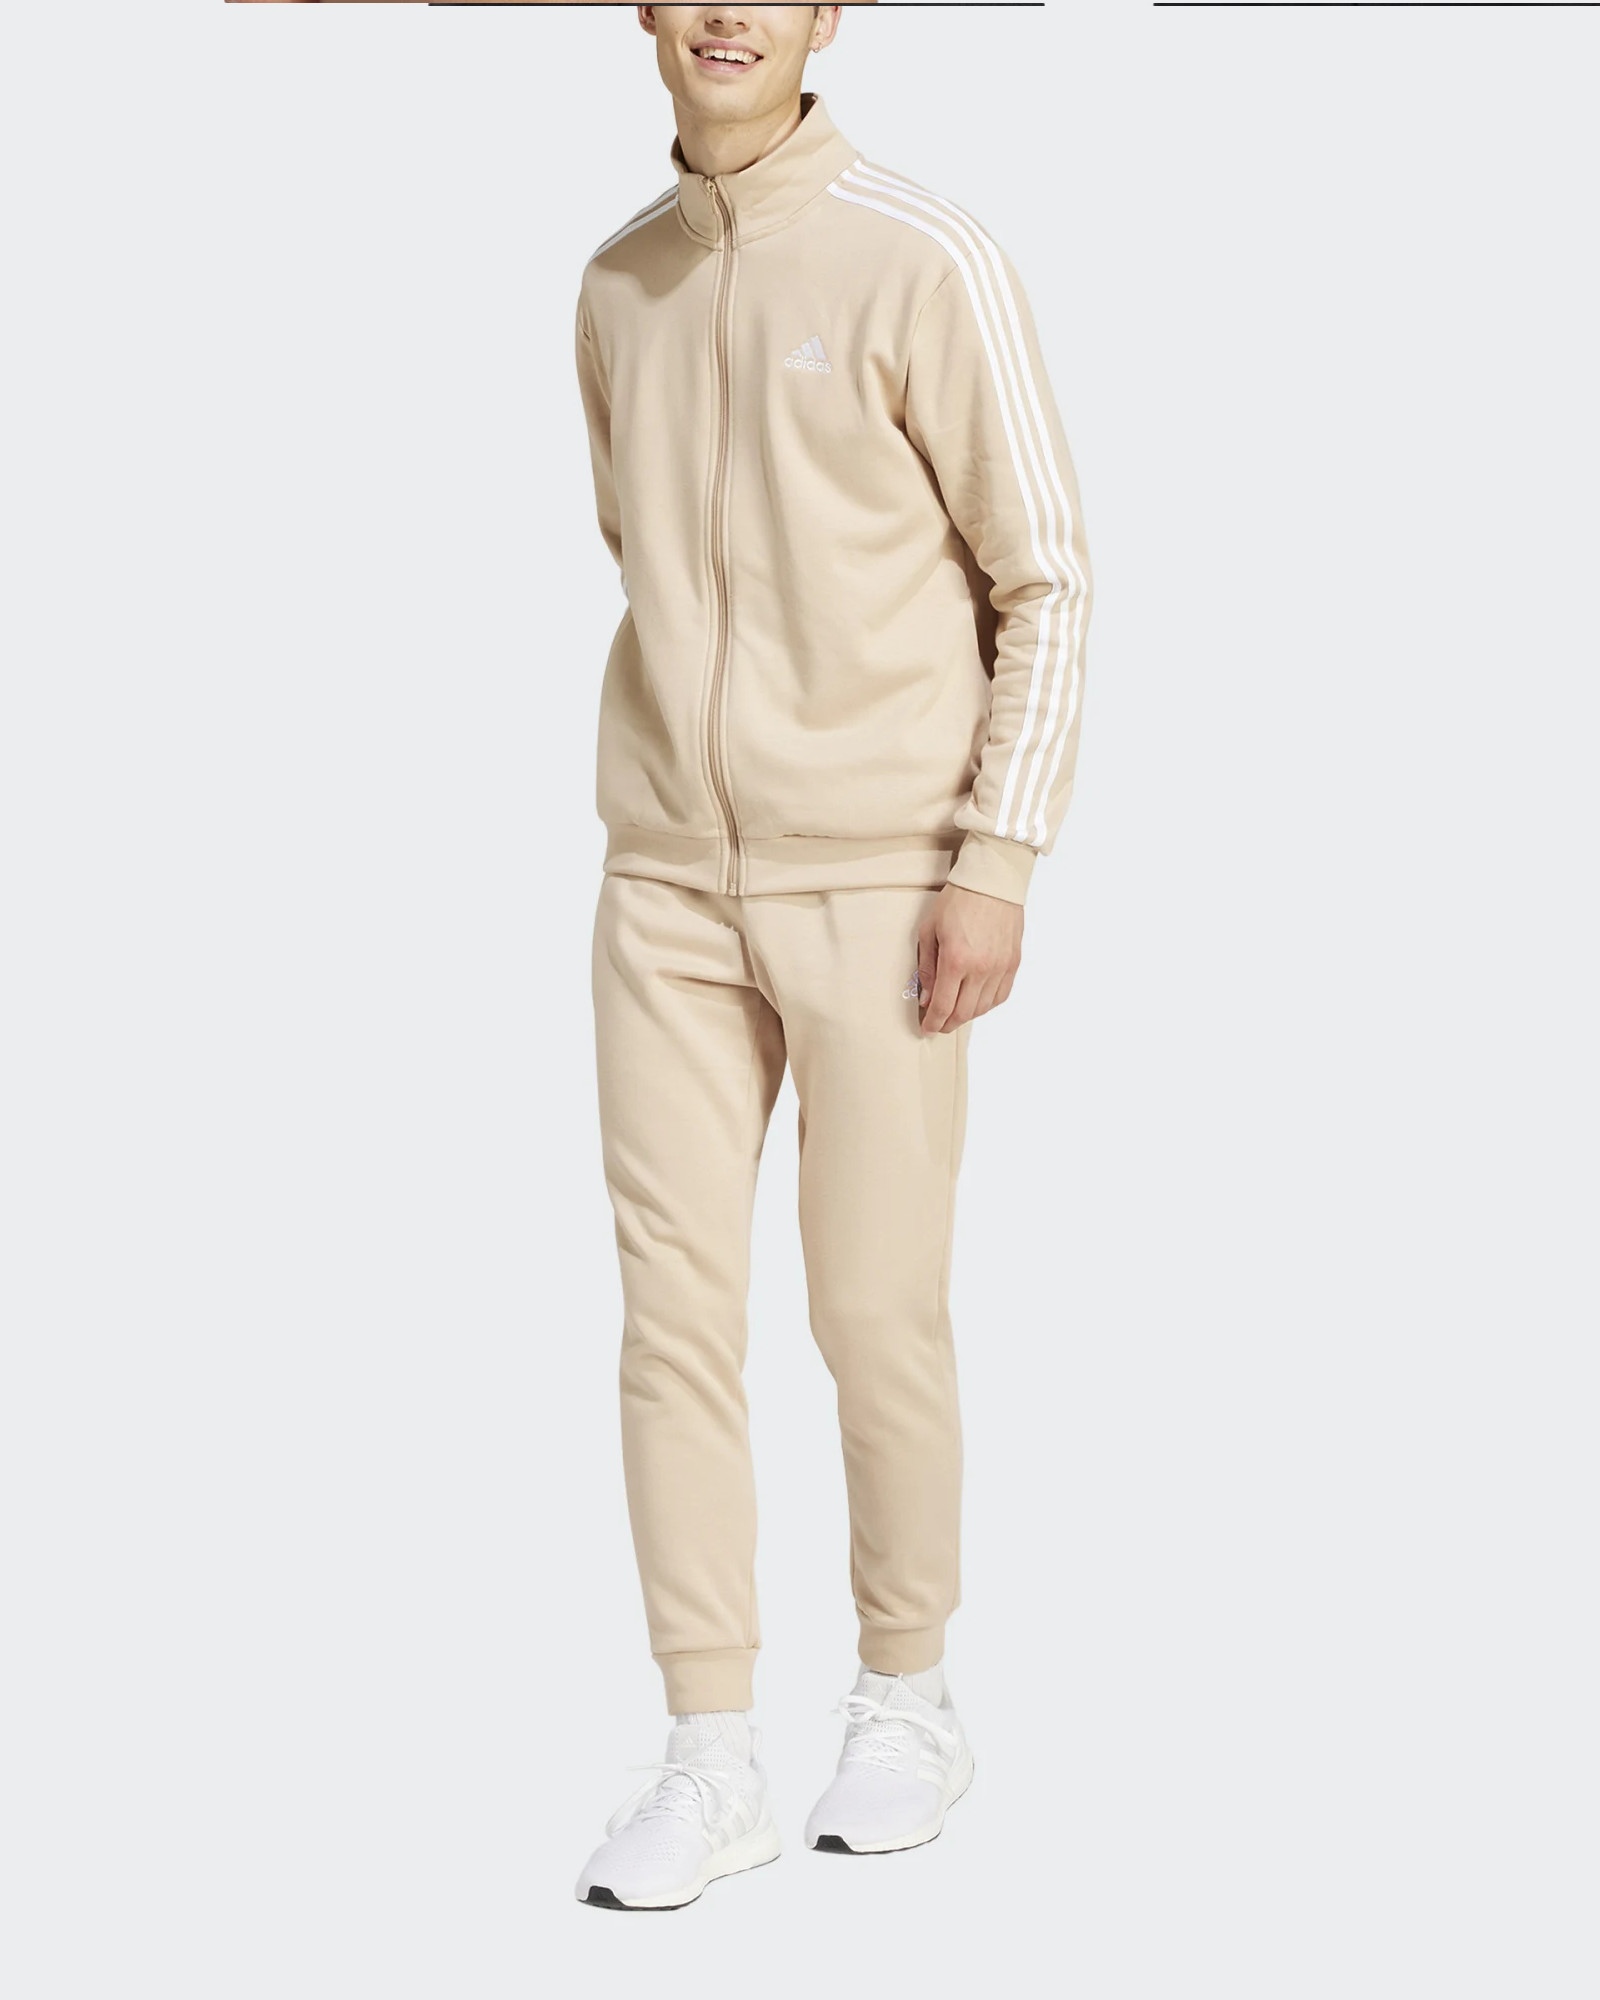  Tuta Intera Completa UOMO Adidas Basic 3-Stripes Fleece pesca Cotone Felpato